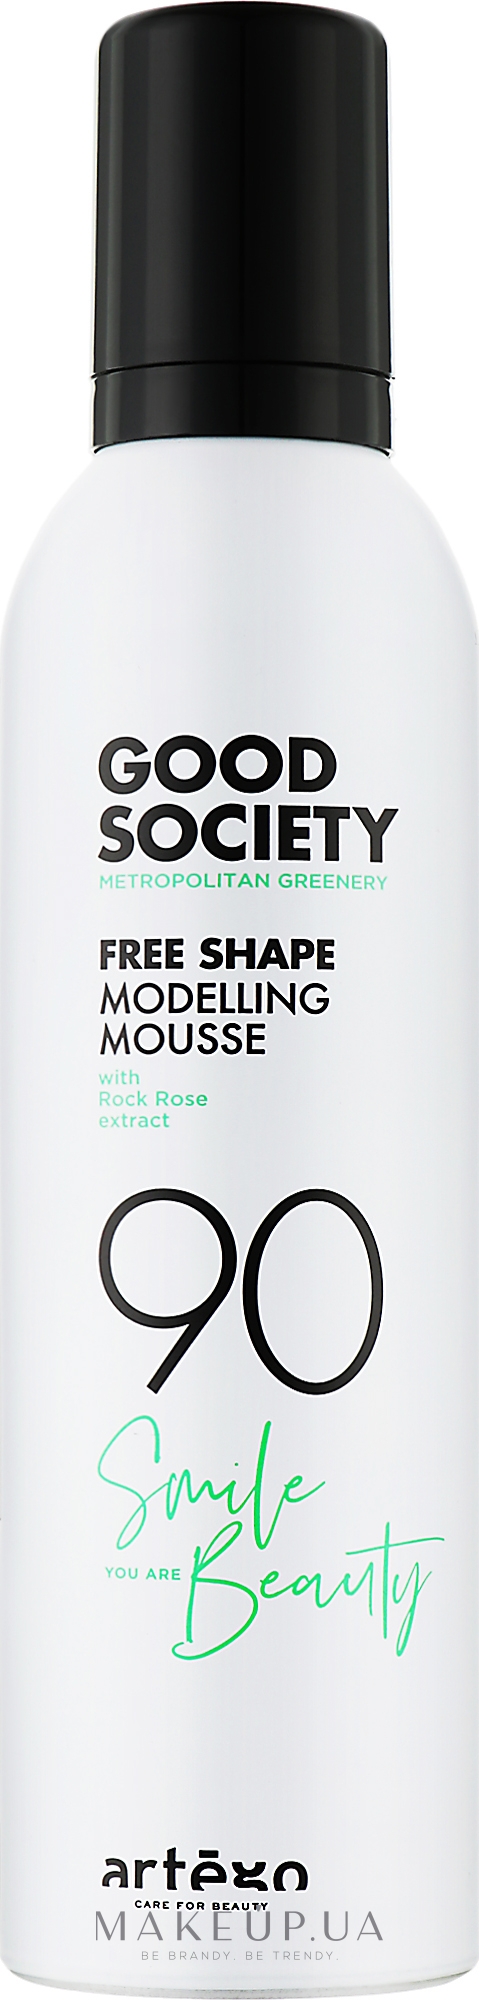 Мусс для укладки волос средней фиксации - Artego Good Society 90 Free Shape Modelling Mousse — фото 250ml